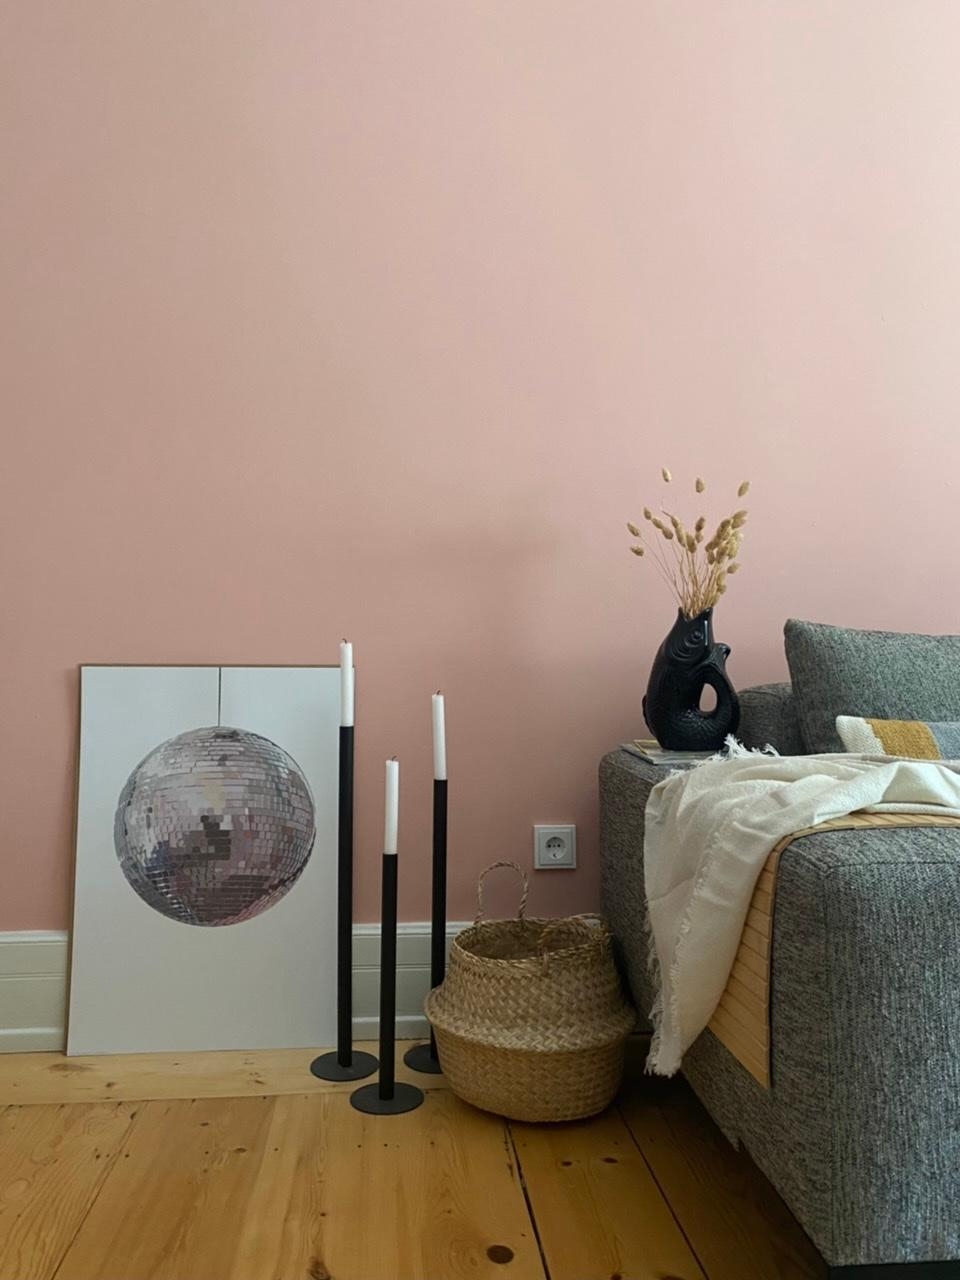 Verliebt in die rosa Wand. 🐽🐽🐽 #newwallcolor #rosa #couch #wohnzimmer